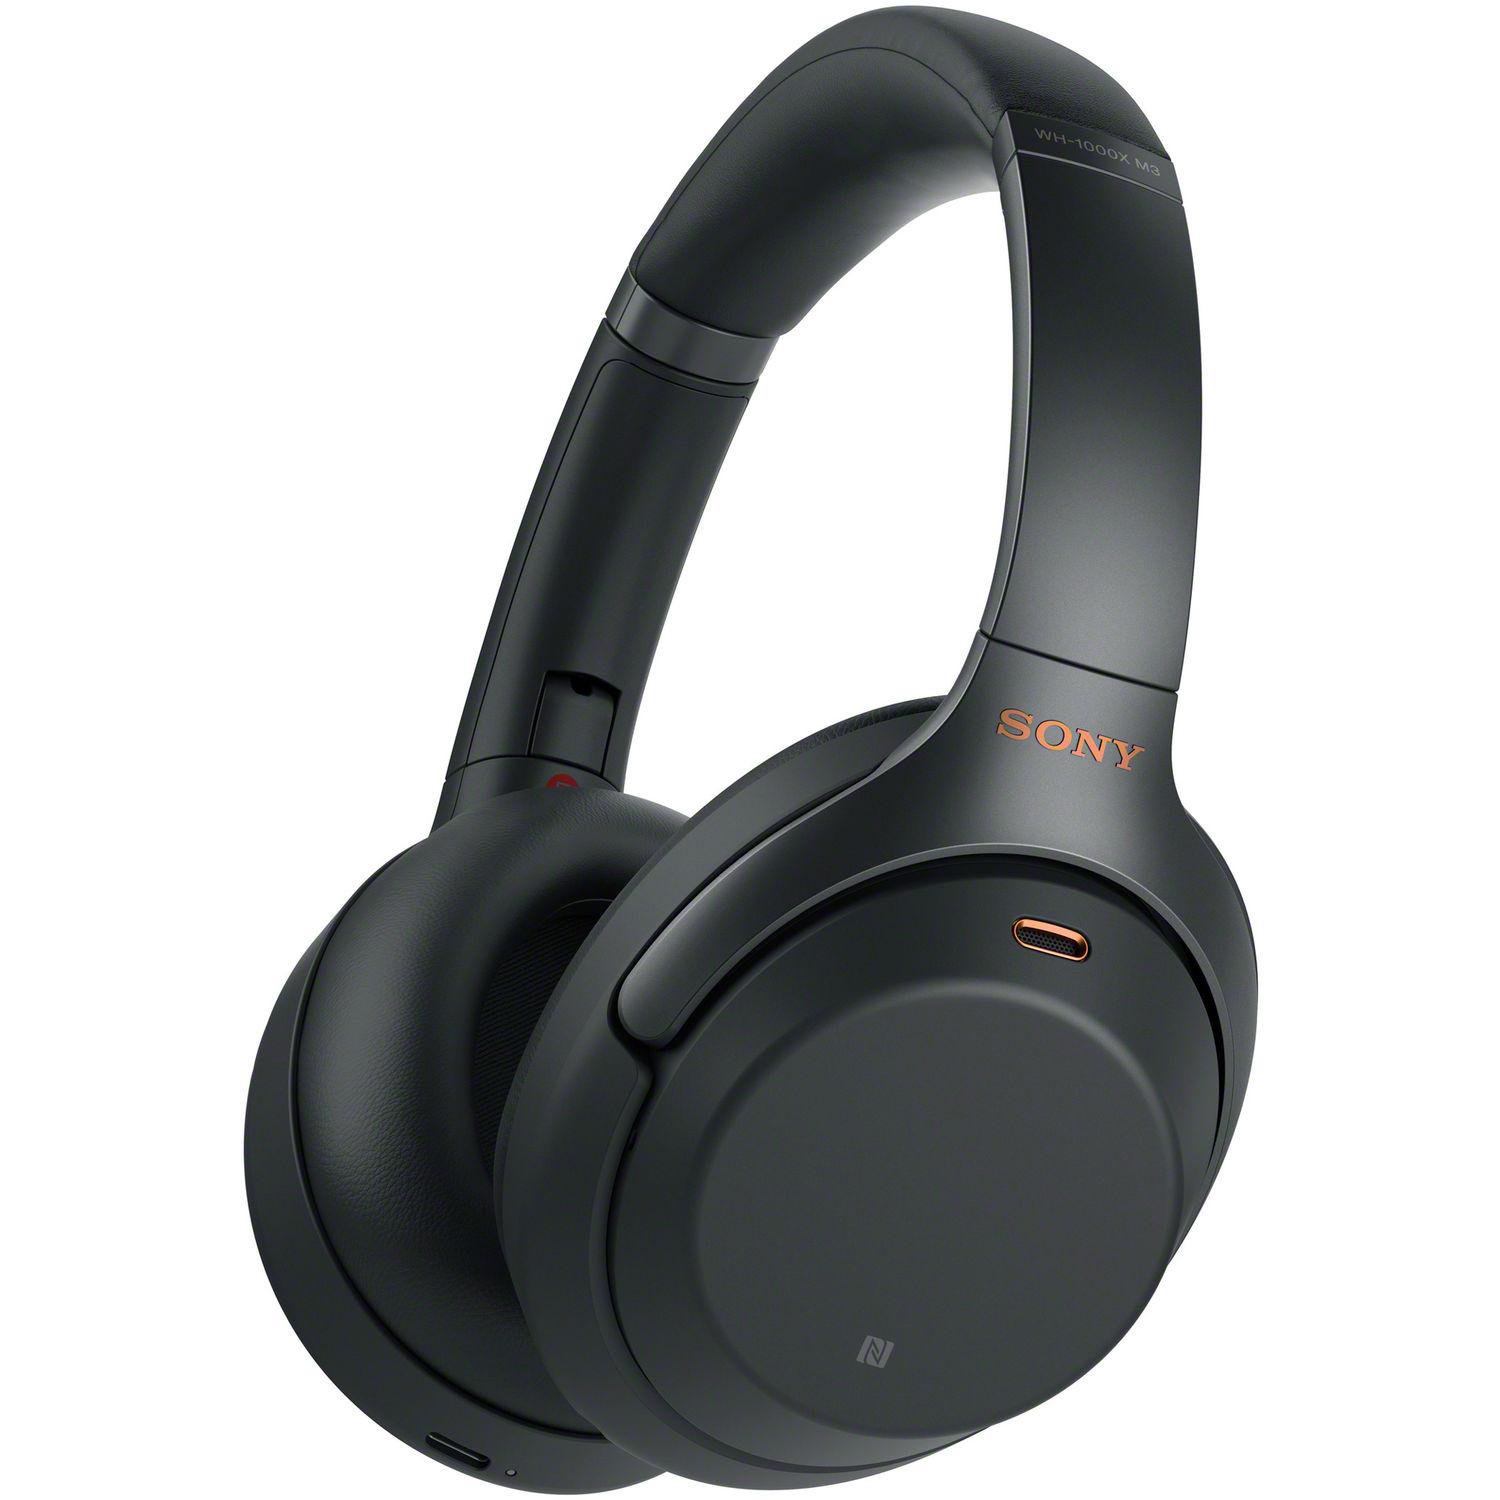 Sony WH-1000XM3 Wireless Noise-Canceling Over-Ear Headphones BLACK - Open Box